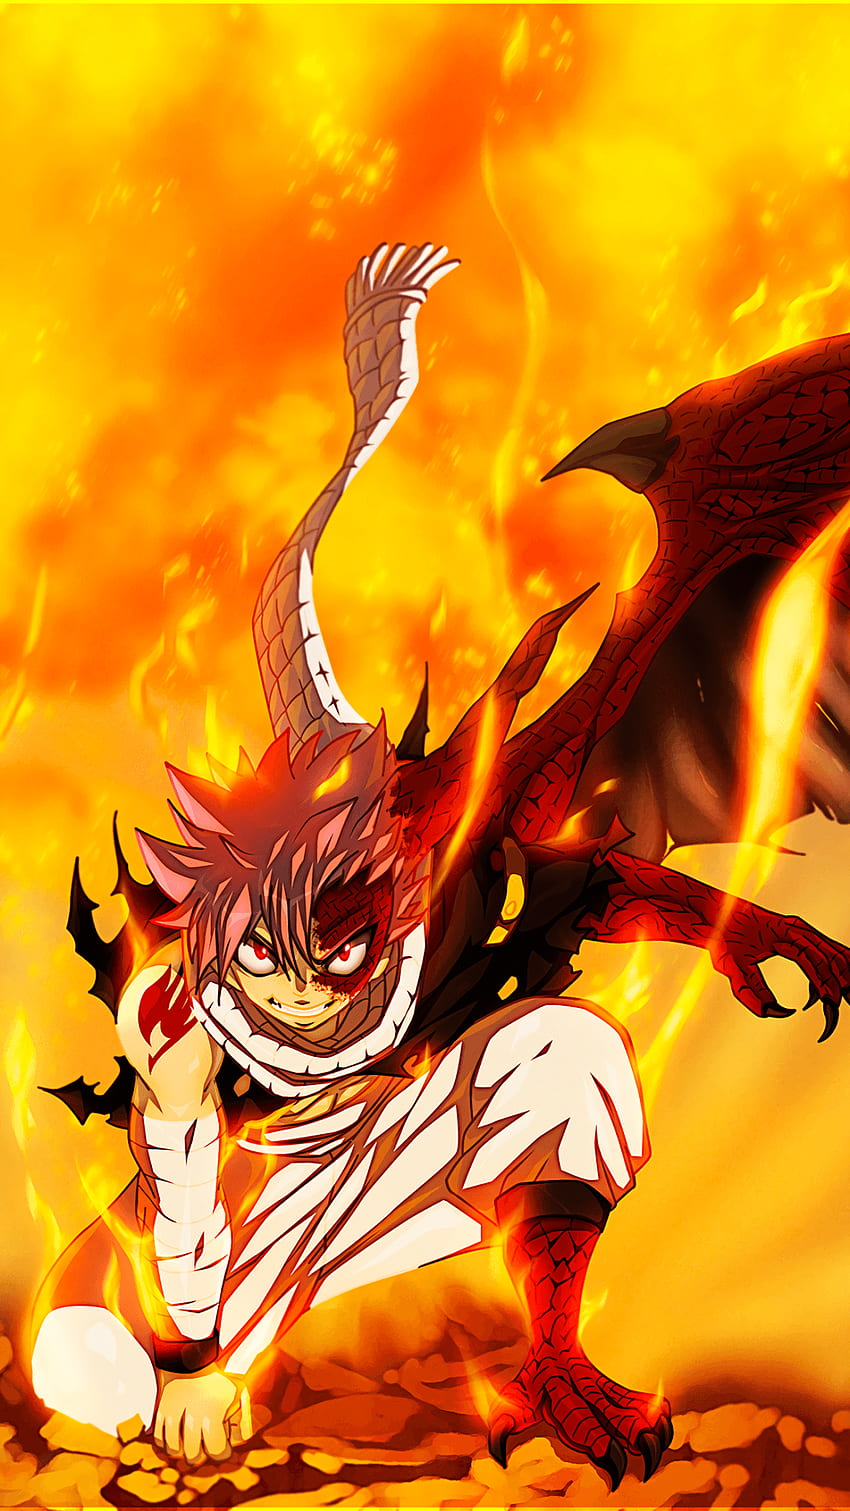 Fire Anime Wallpaper by PMazzuco on DeviantArt